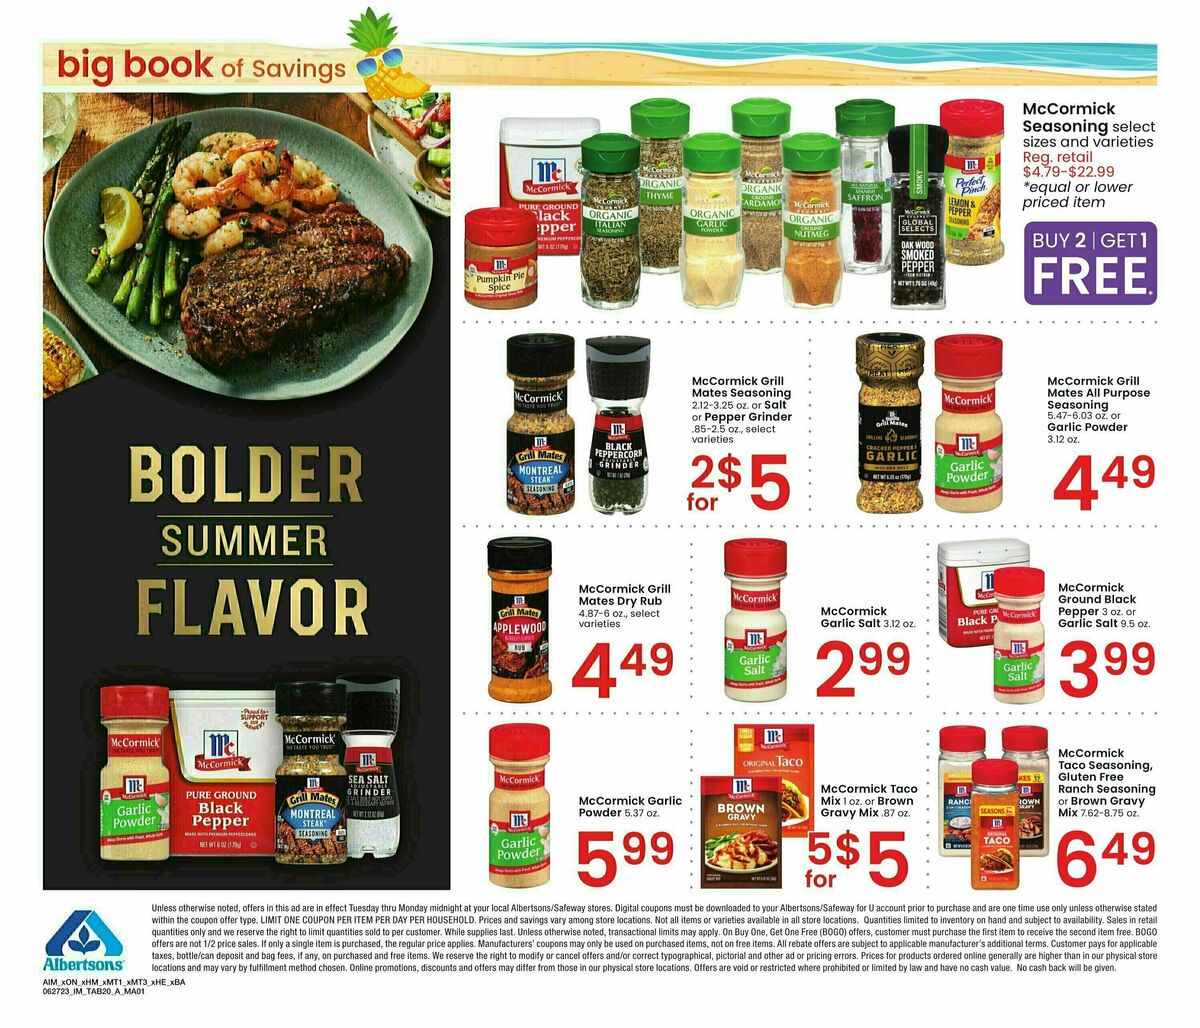 Albertsons Big Book of Savings Weekly Ad from June 27